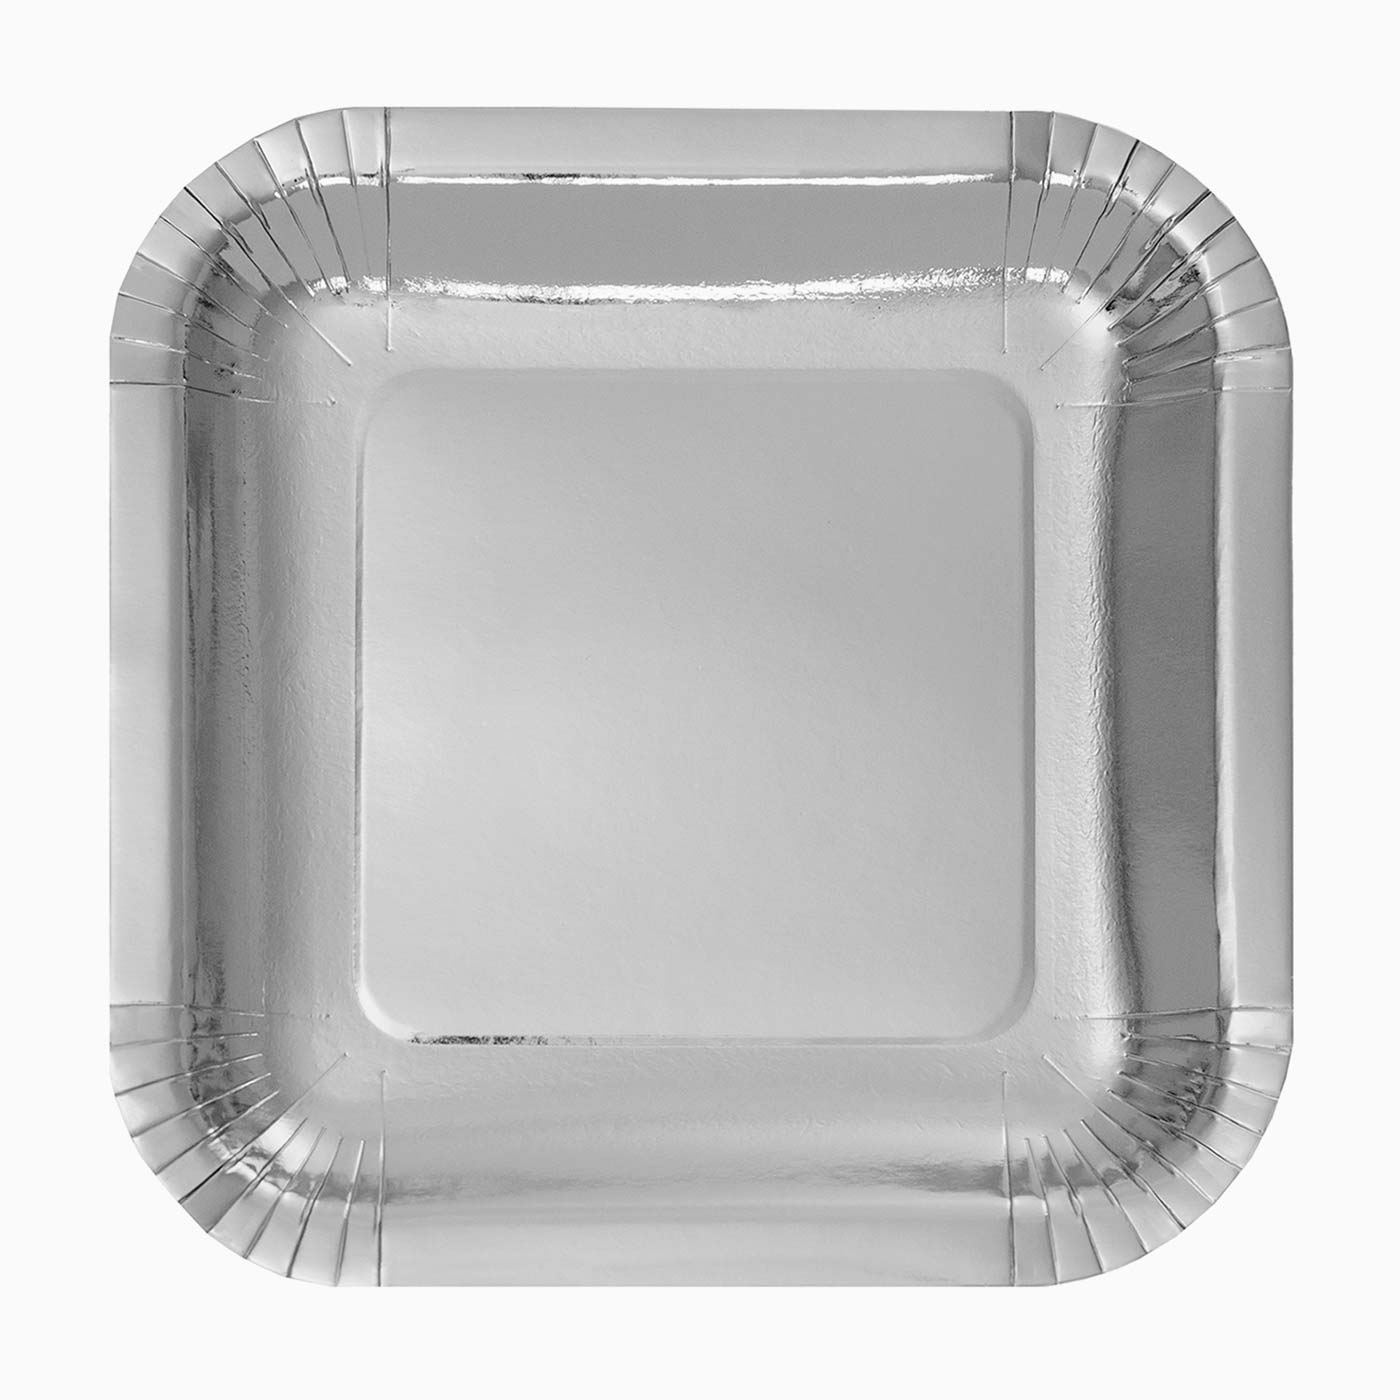 Metallized square cardboard plate 26 x 26 cm silver